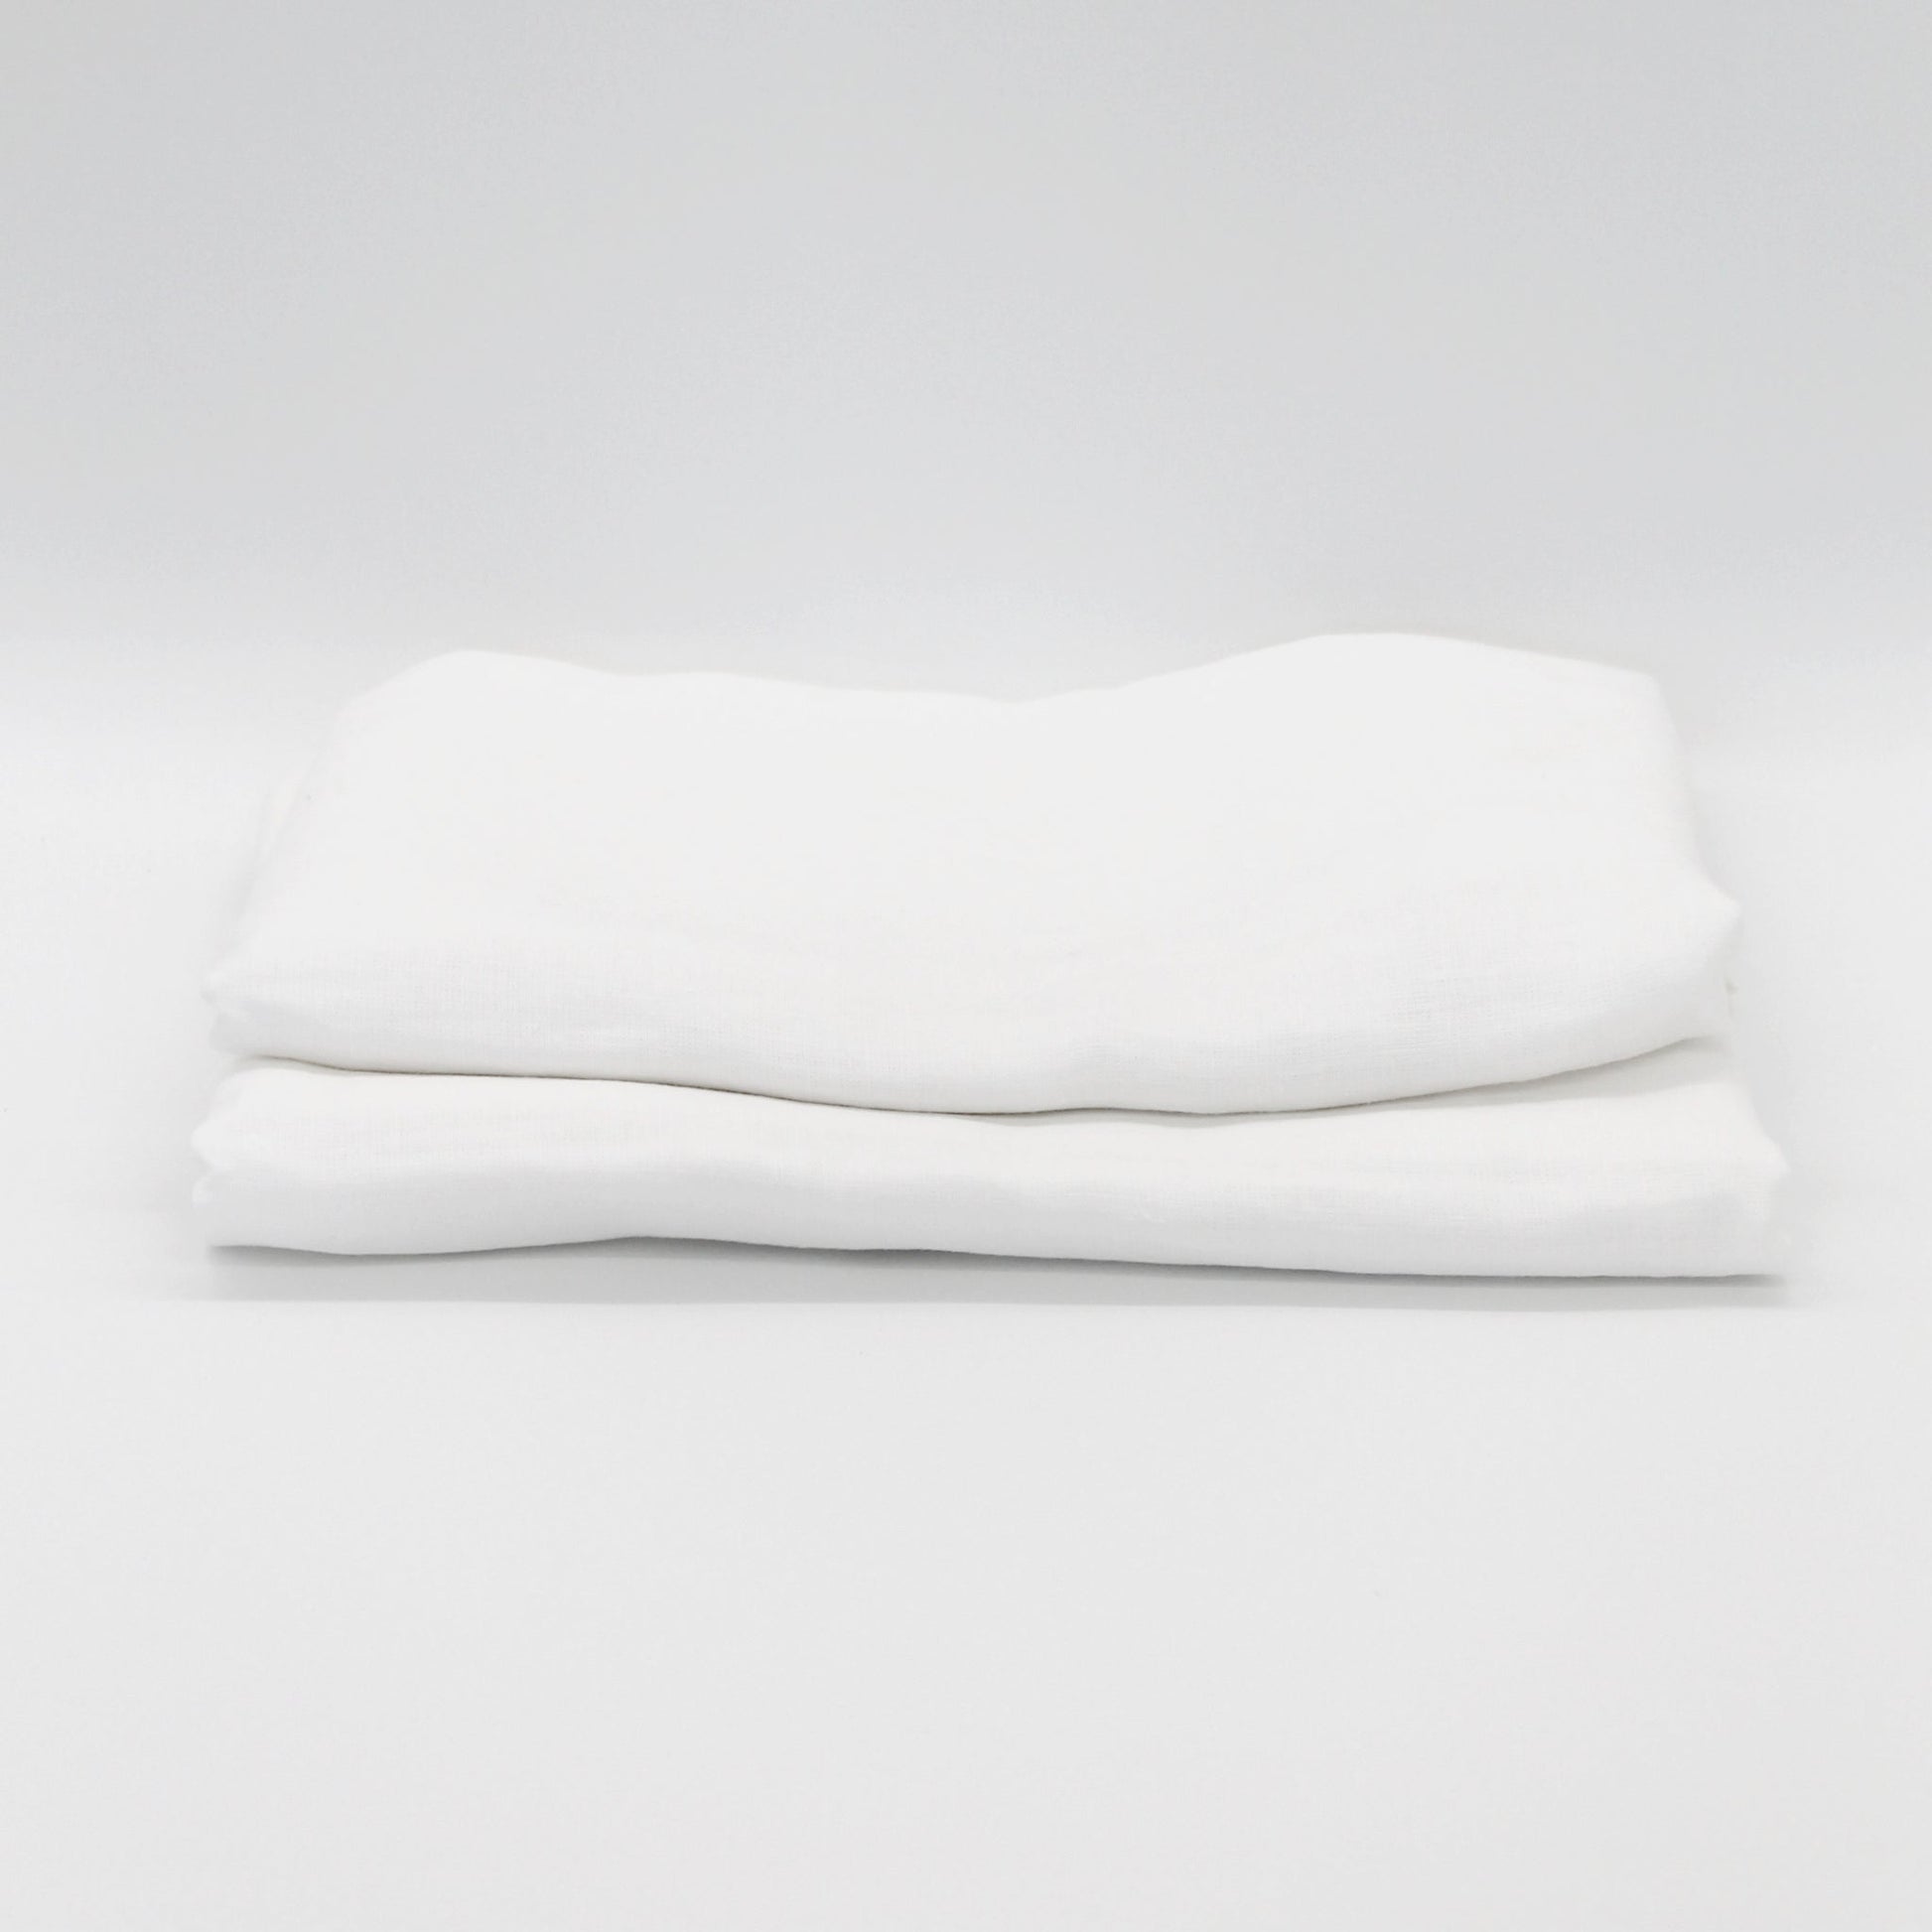 pure hemp linen pillowcases in white European and standard sizes